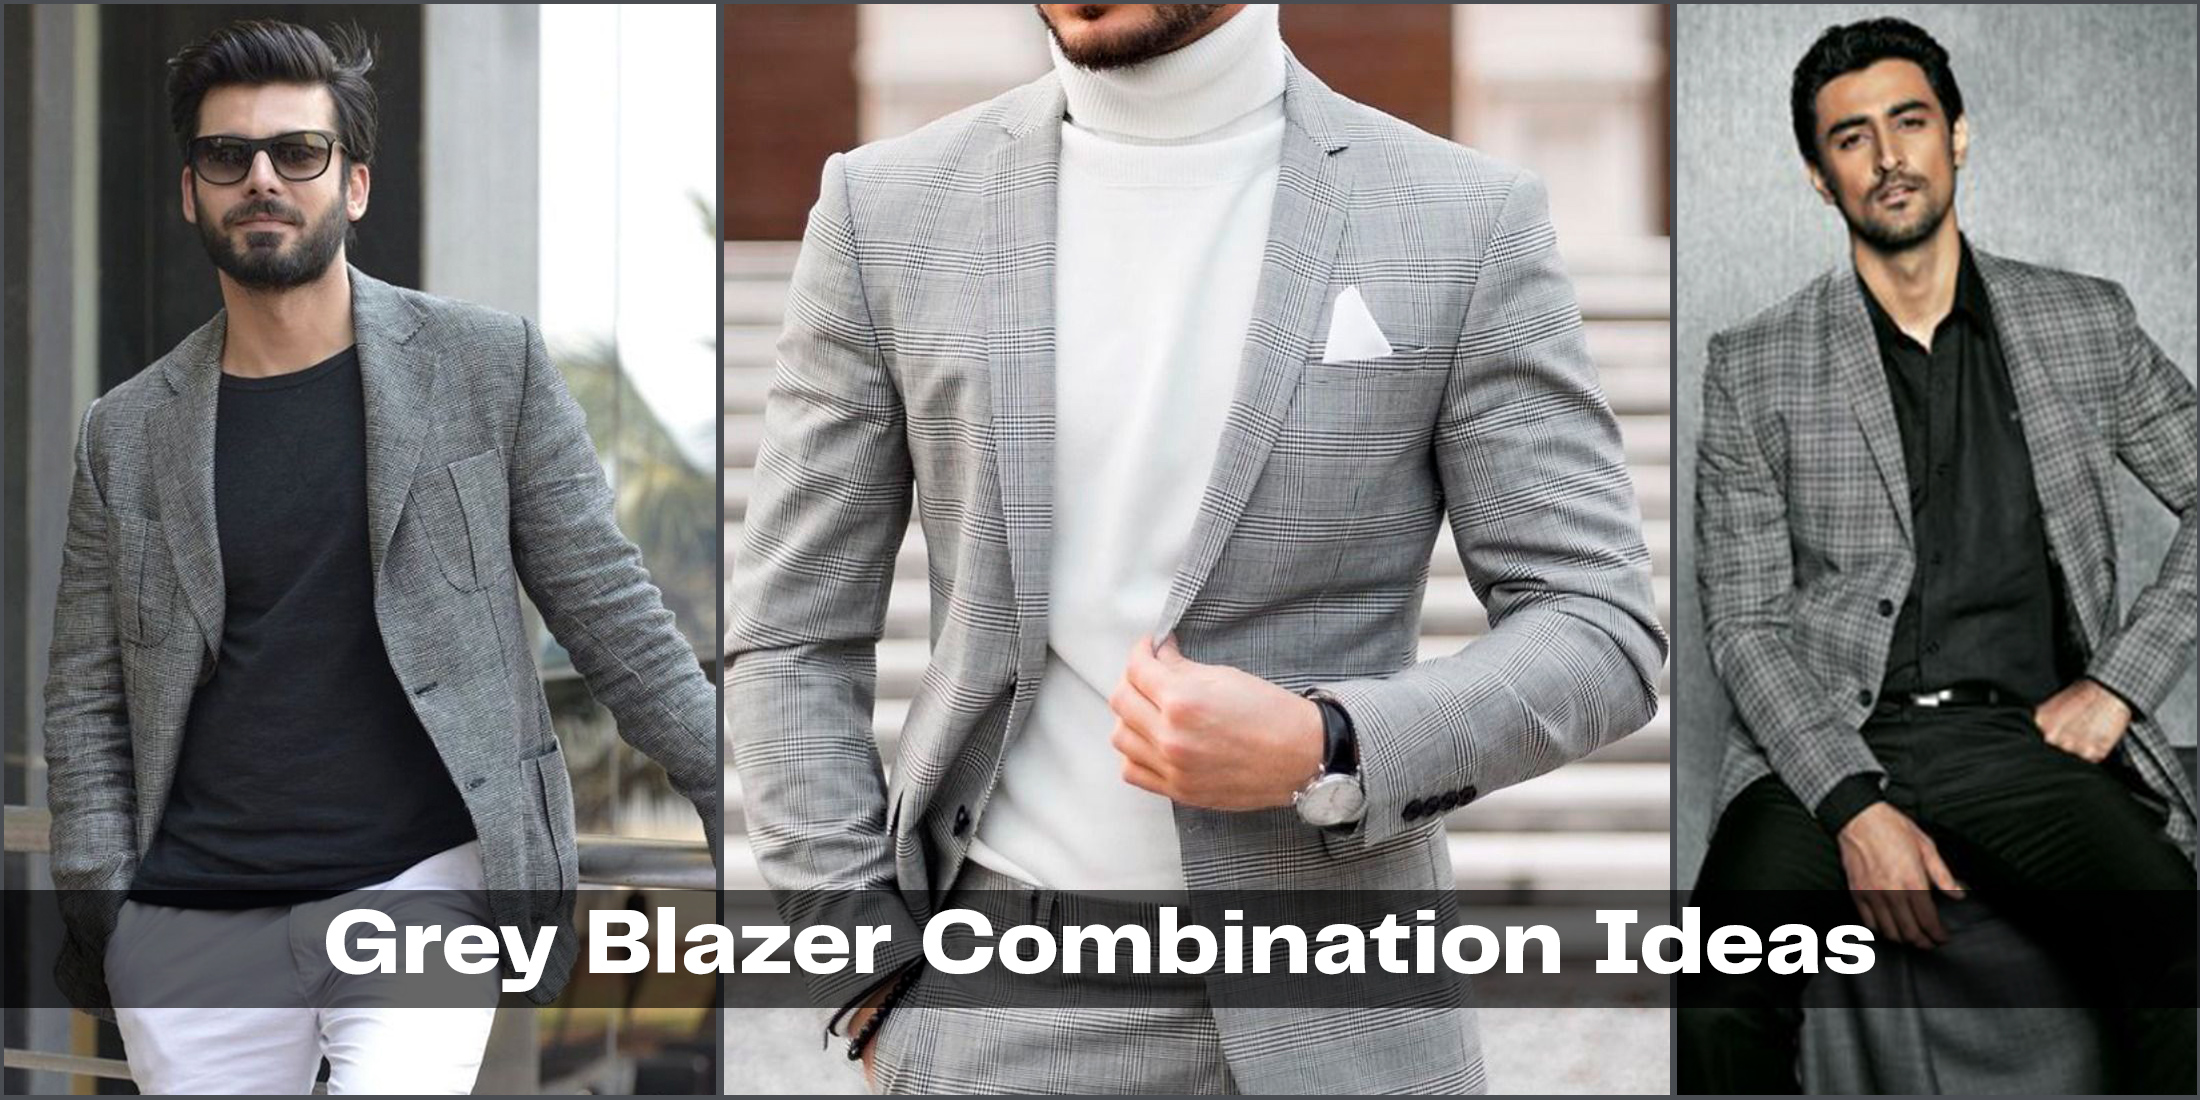 Snor Calamity galop 11+ Best Grey Blazer Combination Ideas for Men 2023